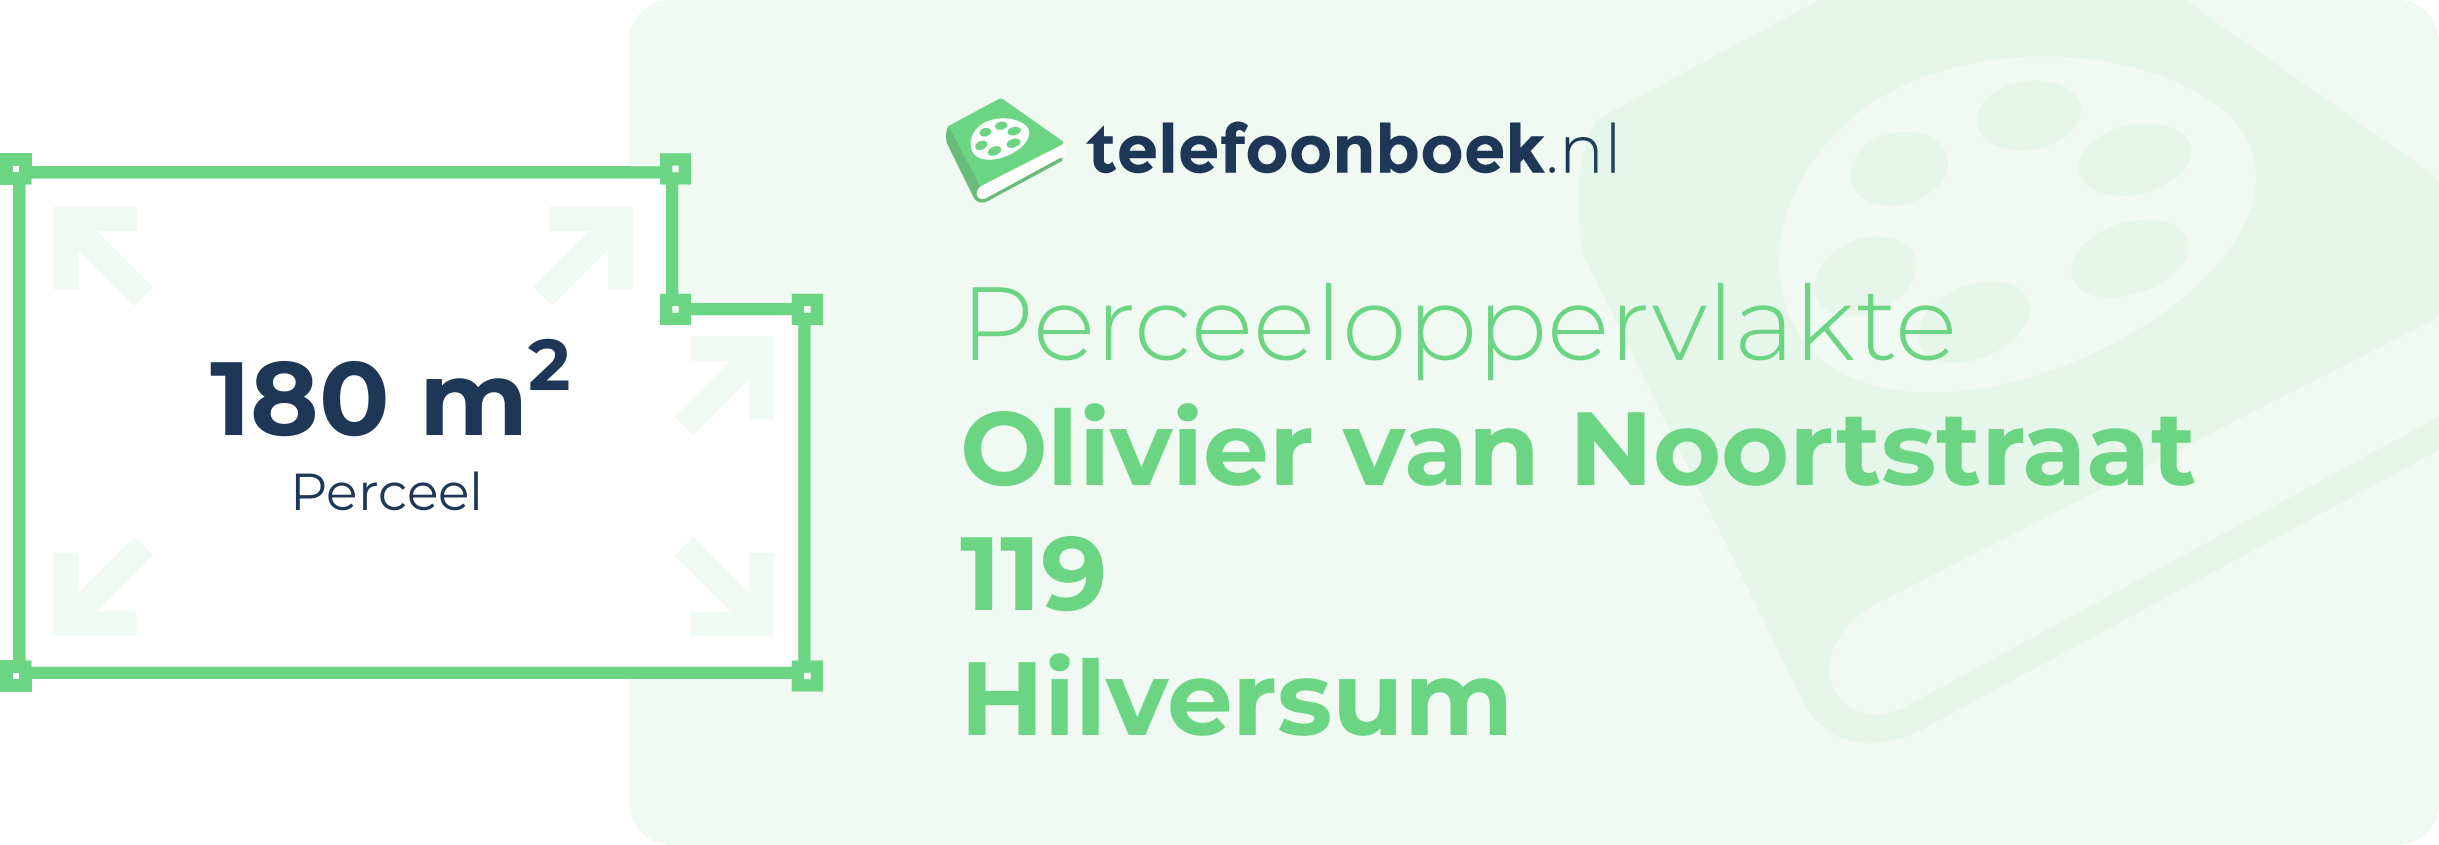 Perceeloppervlakte Olivier Van Noortstraat 119 Hilversum